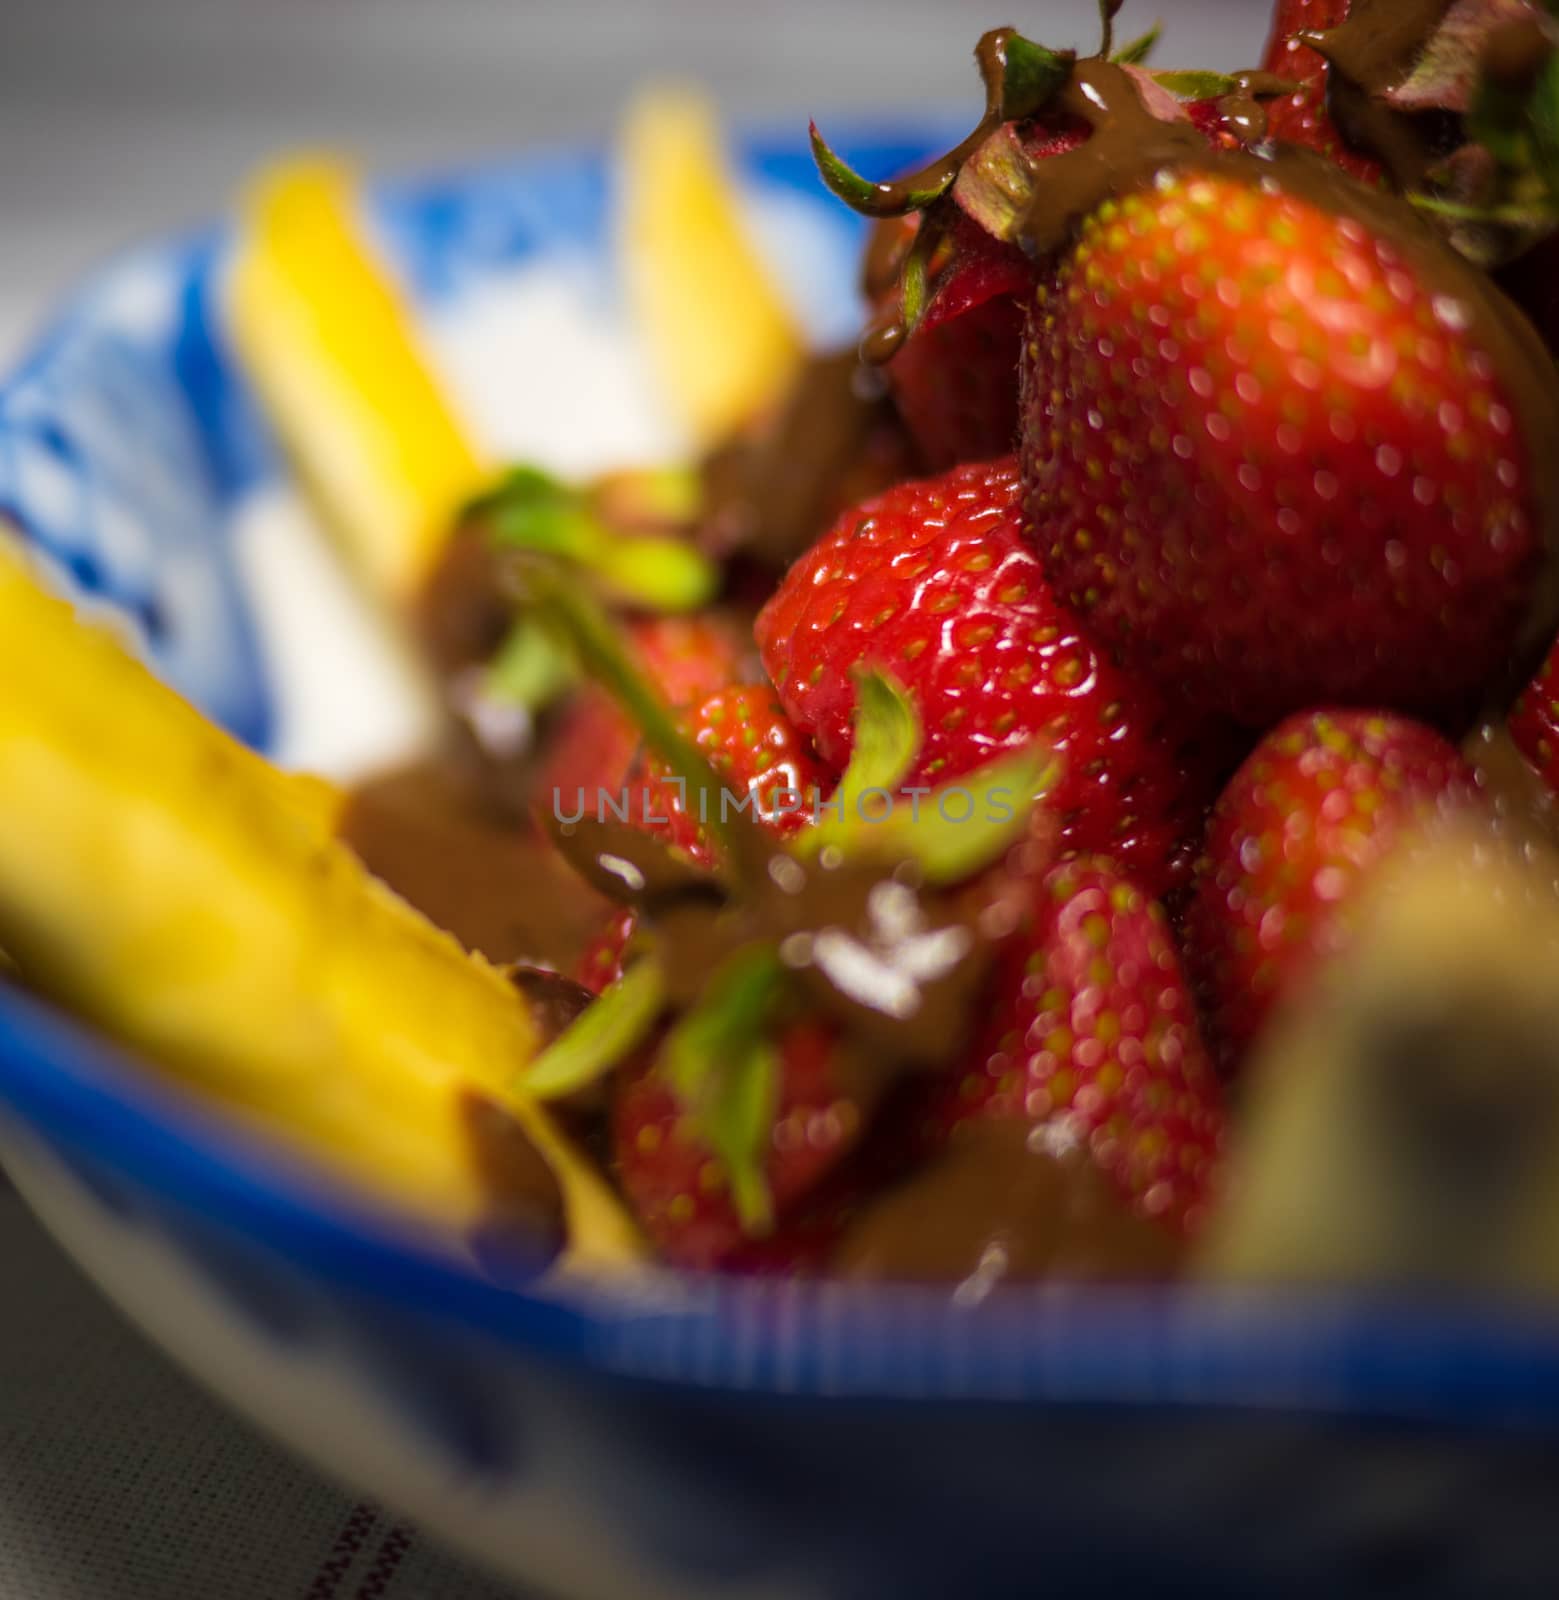 Banana and strawberry under hot chodolate by dolfinvik